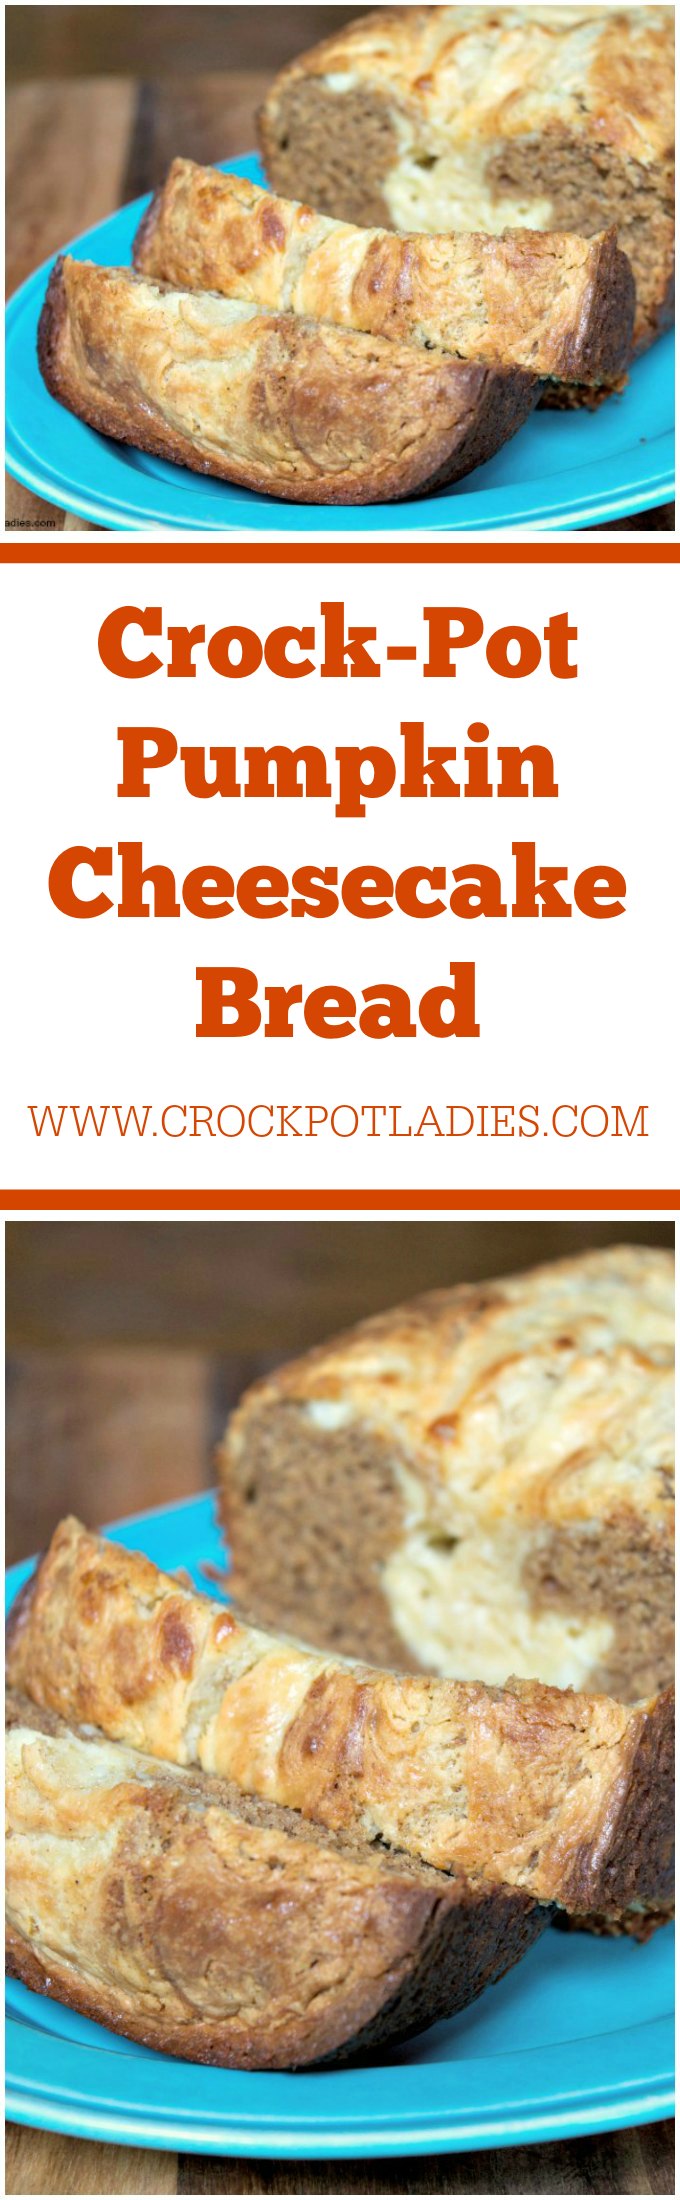 Crock-Pot Pumpkin Cheesecake Bread